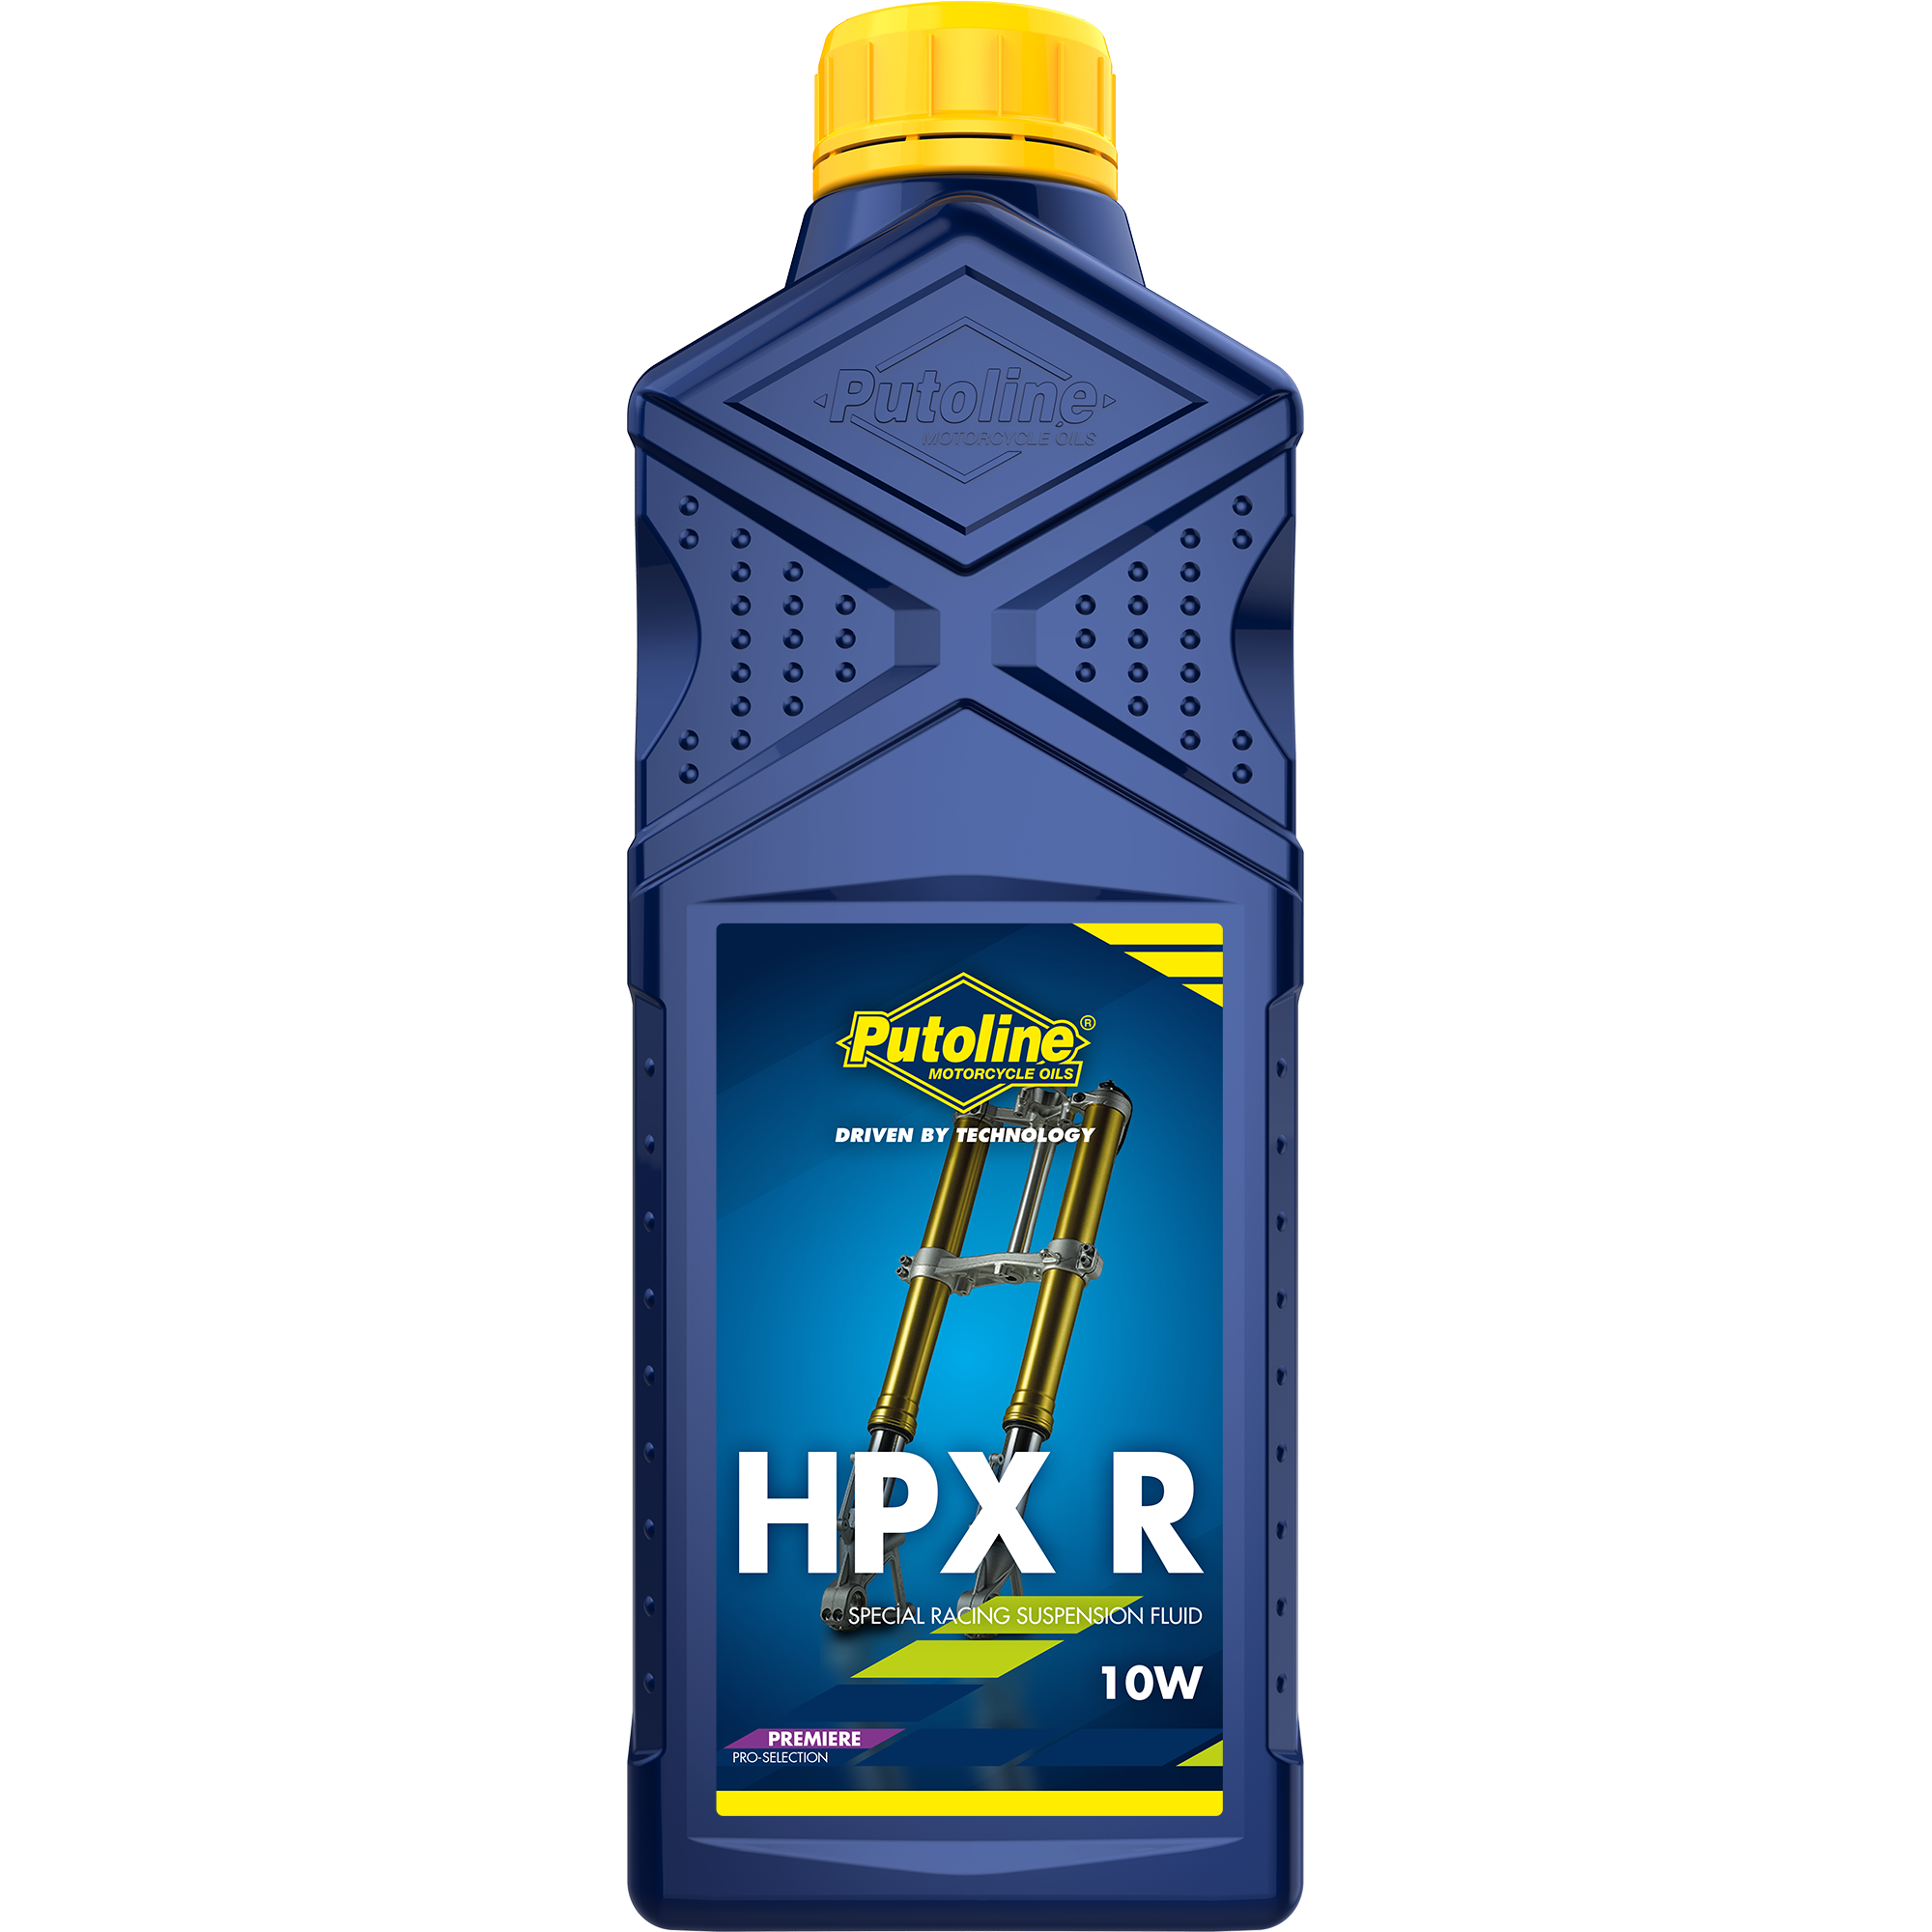 Putoline HPX R 10W, 1 lt